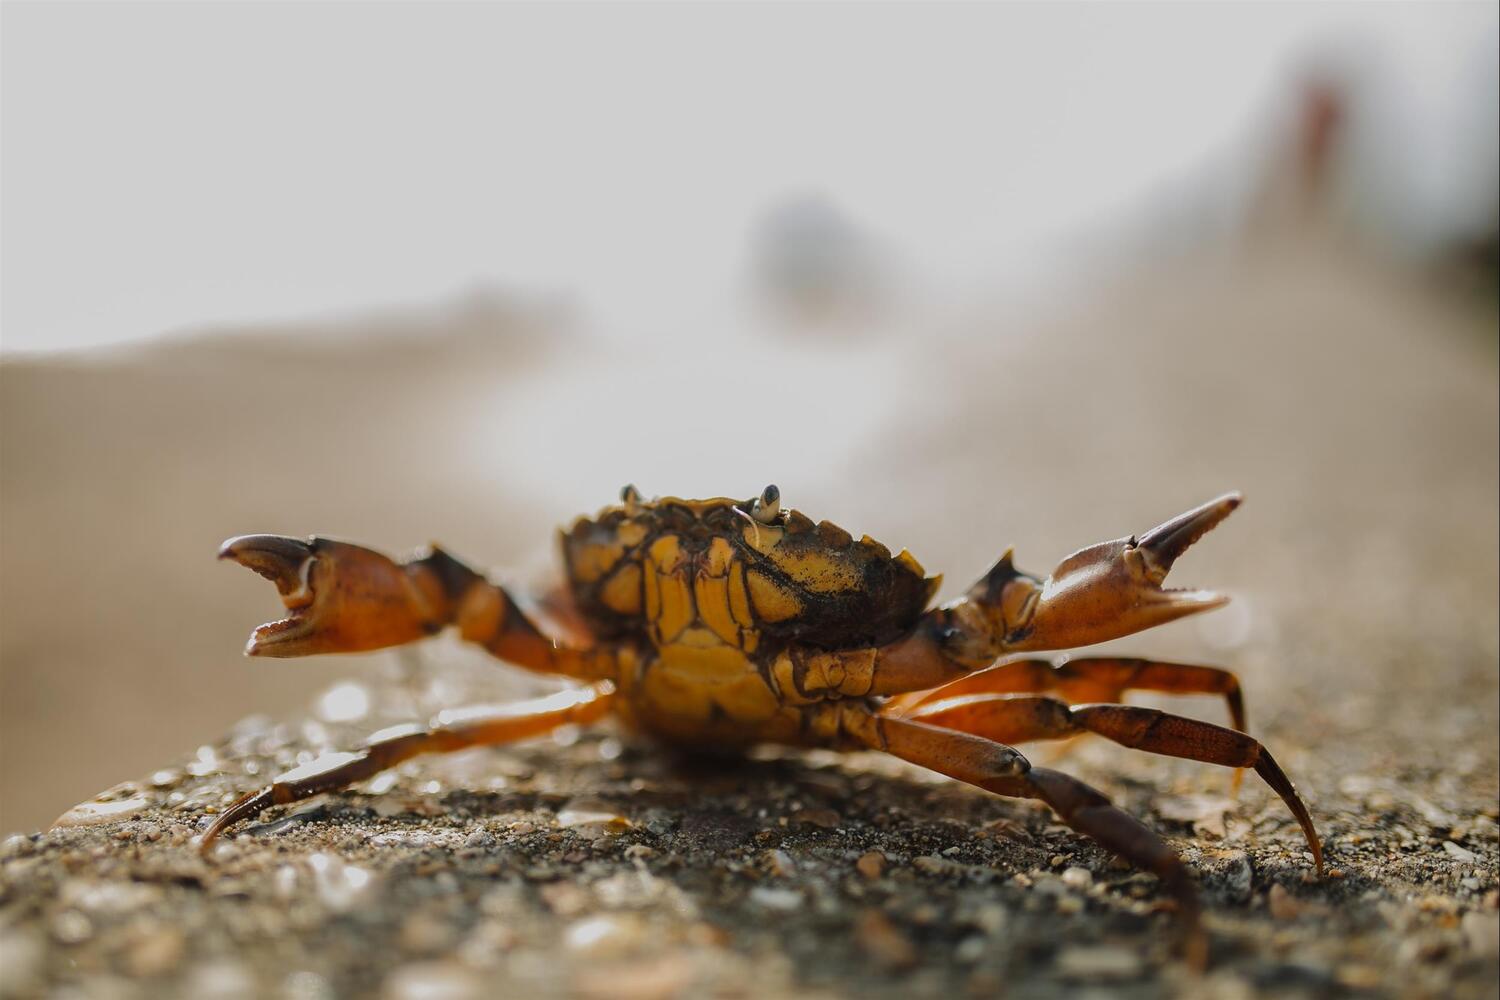 crab-on-beach.jpg